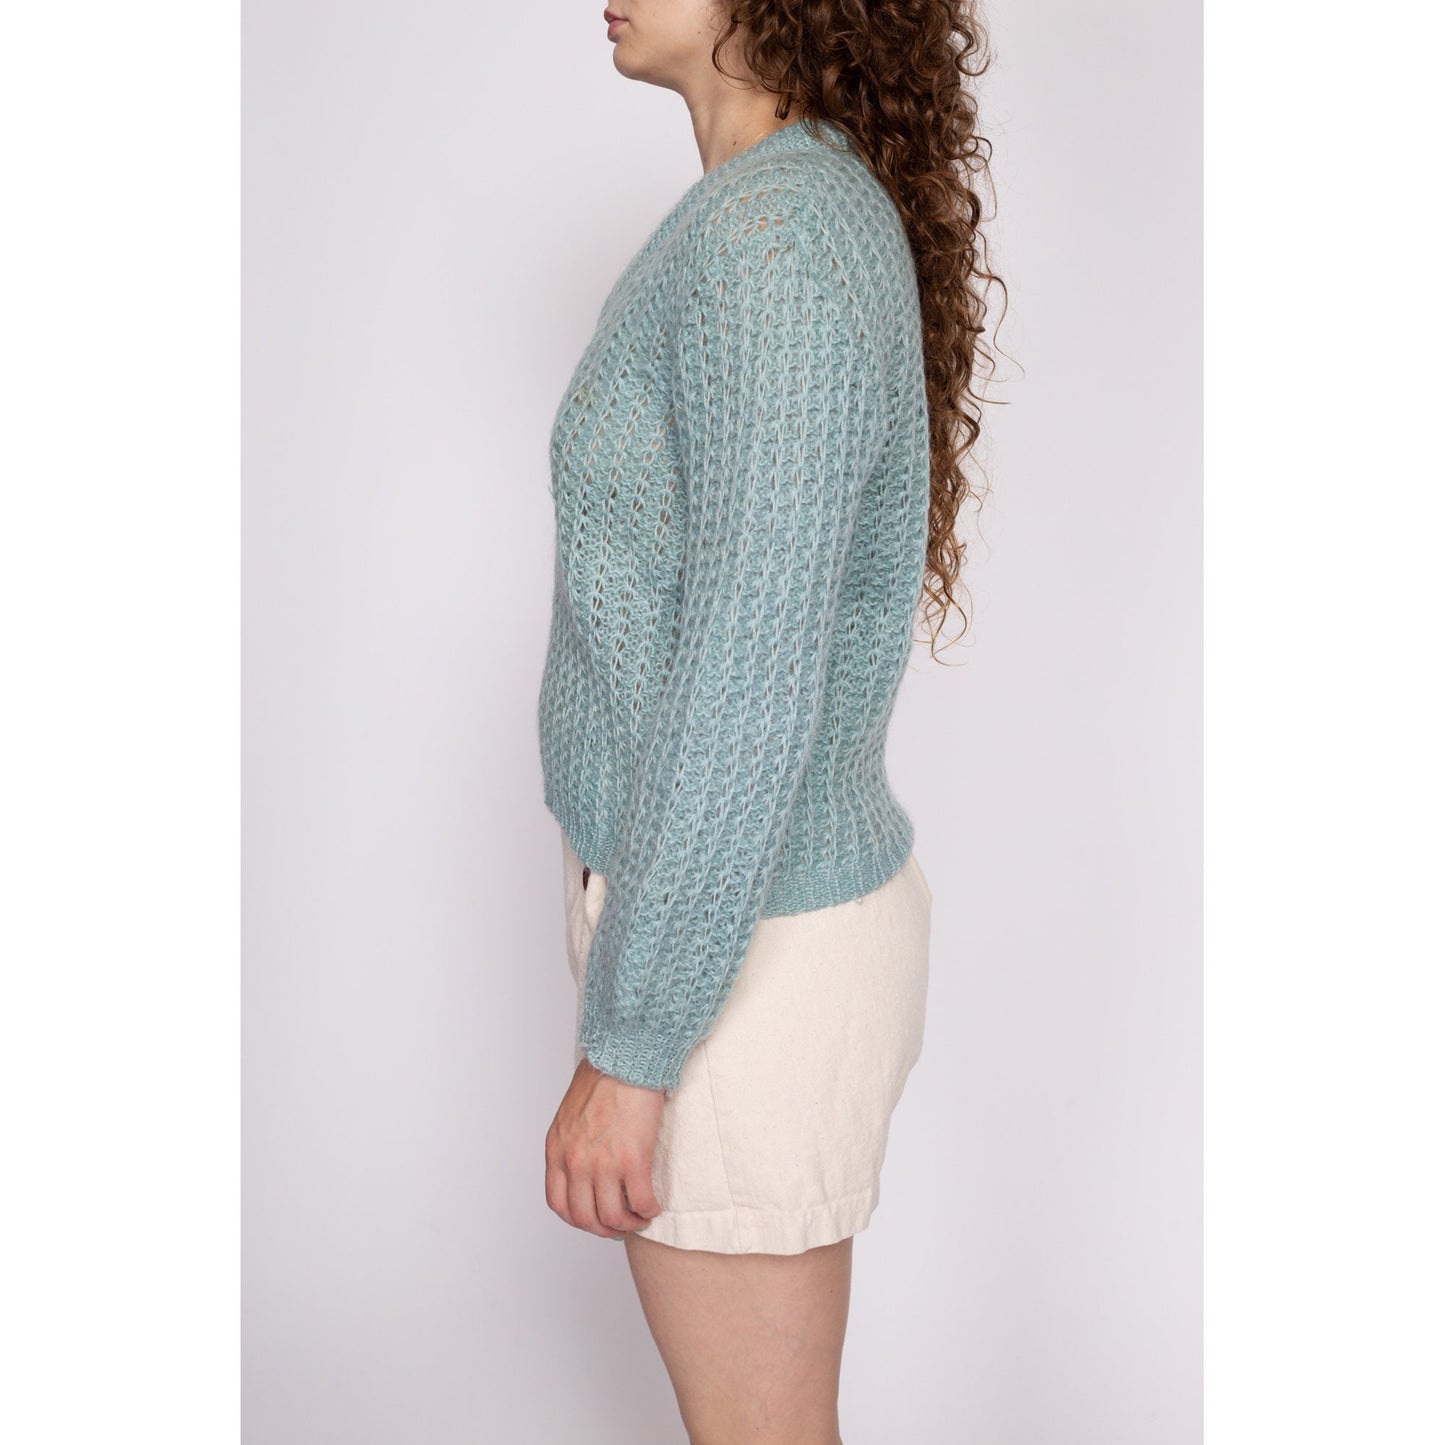 M| 70s Aqua Blue Mohair Wool Sweater - Medium | Vintage Sheer V Neck Open Weave Knit Pullover